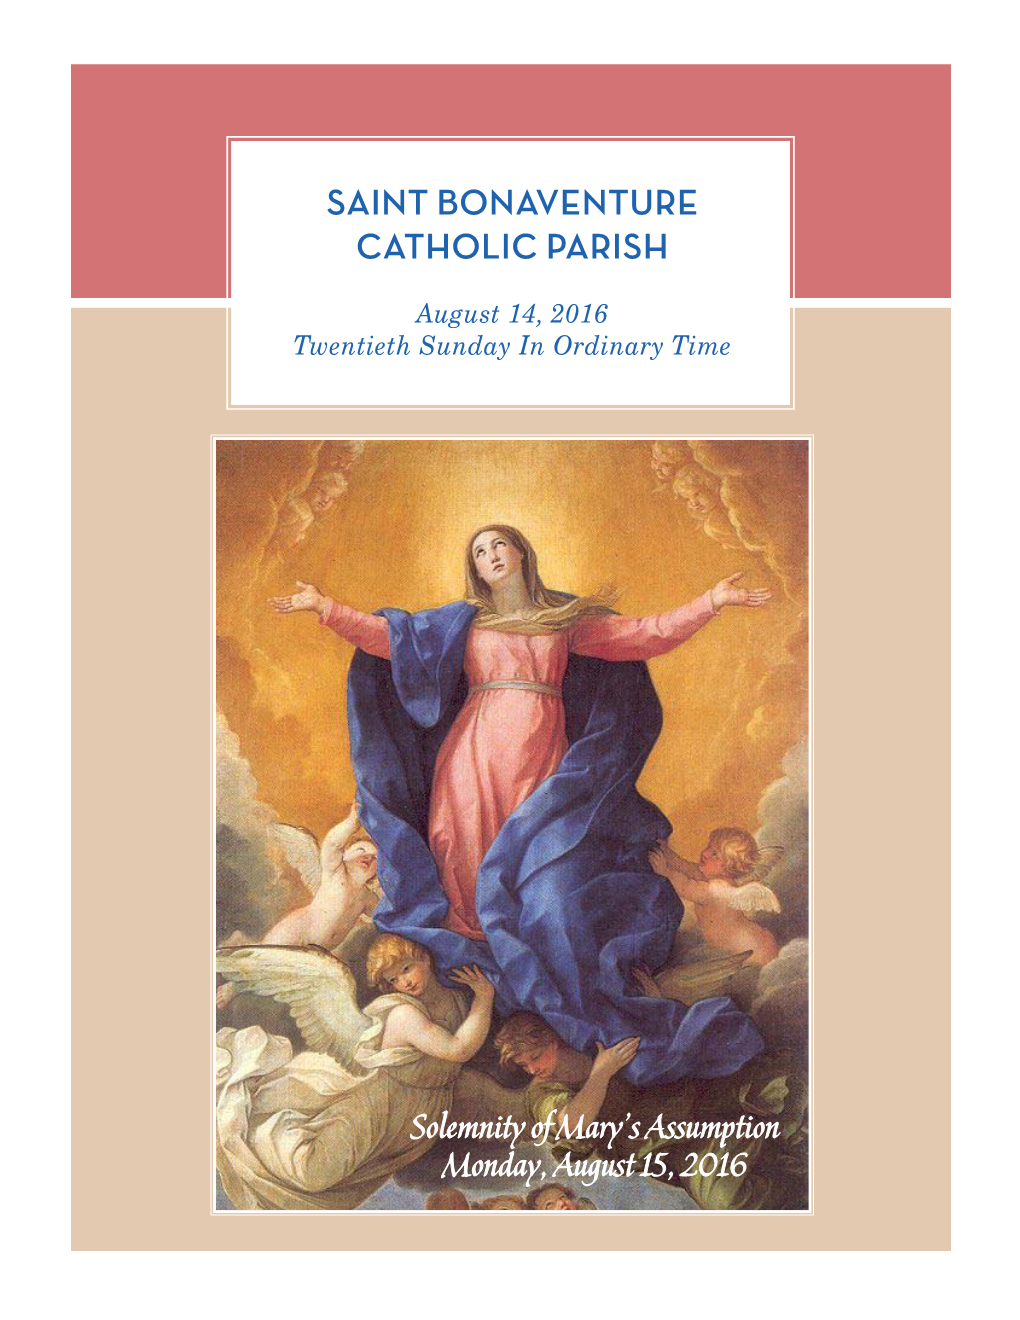 Saint Bonaventure Catholic Parish